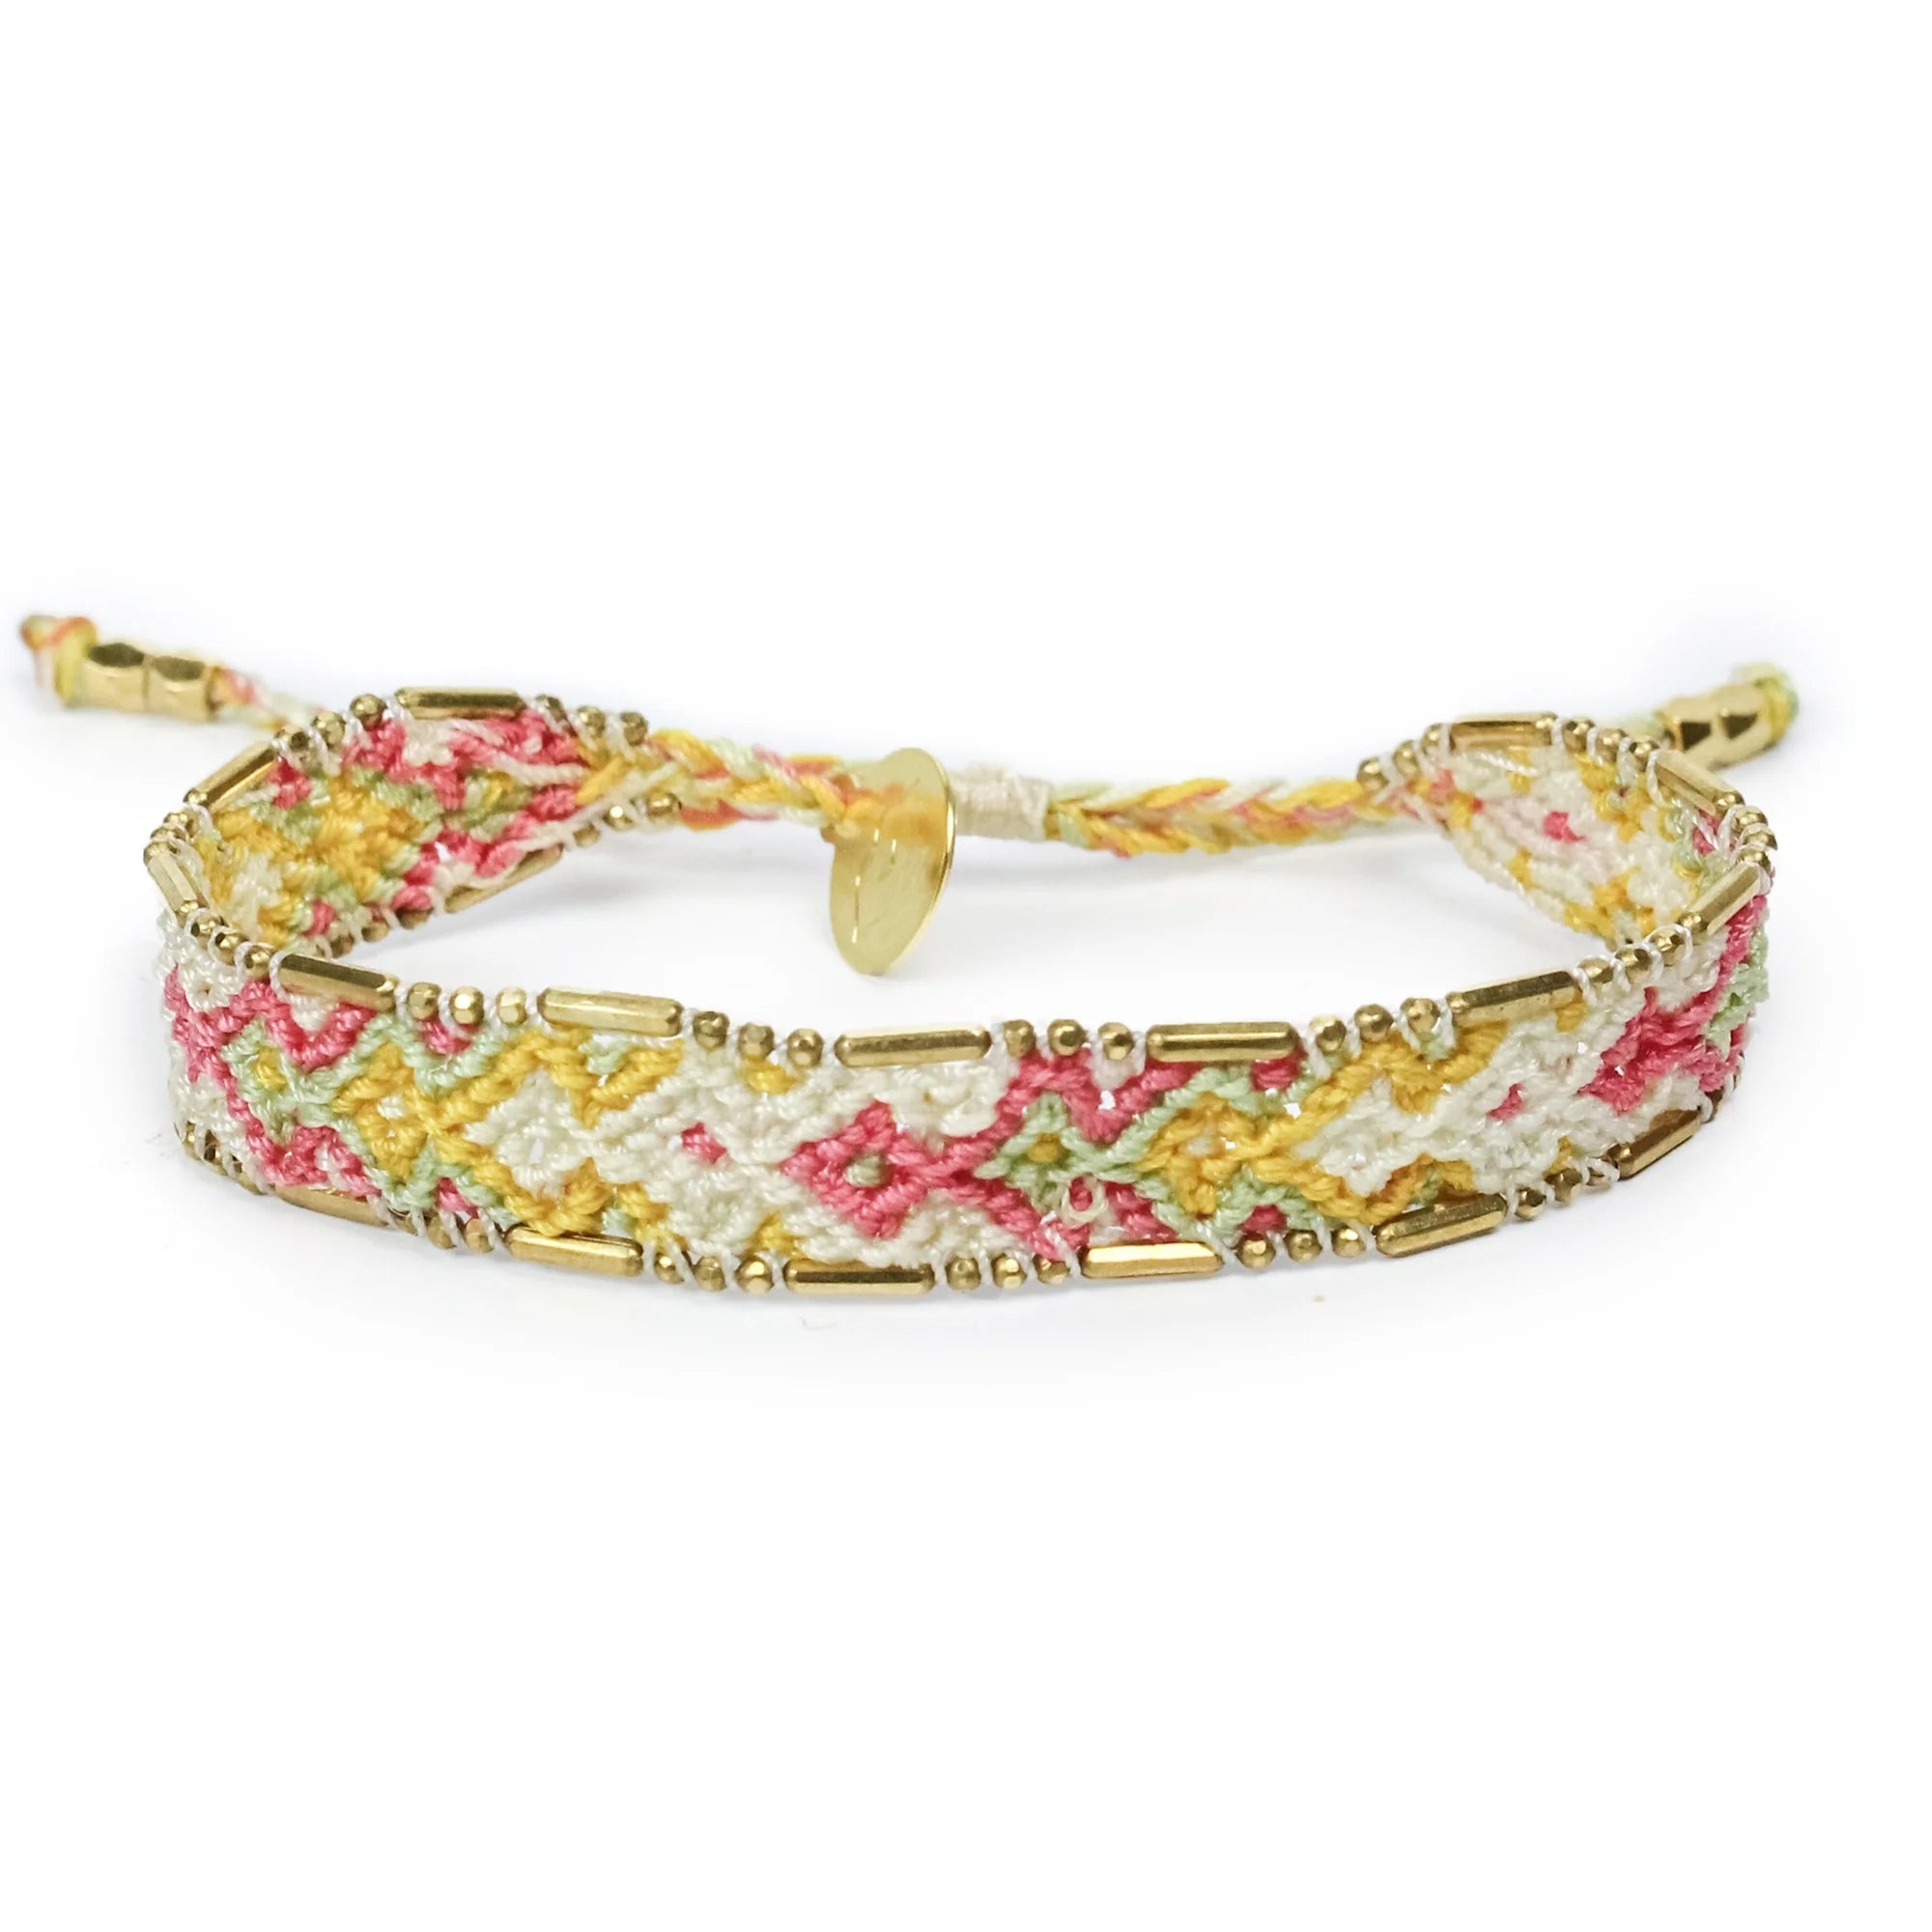 Bali Friendship Bracelet- Sold Individually